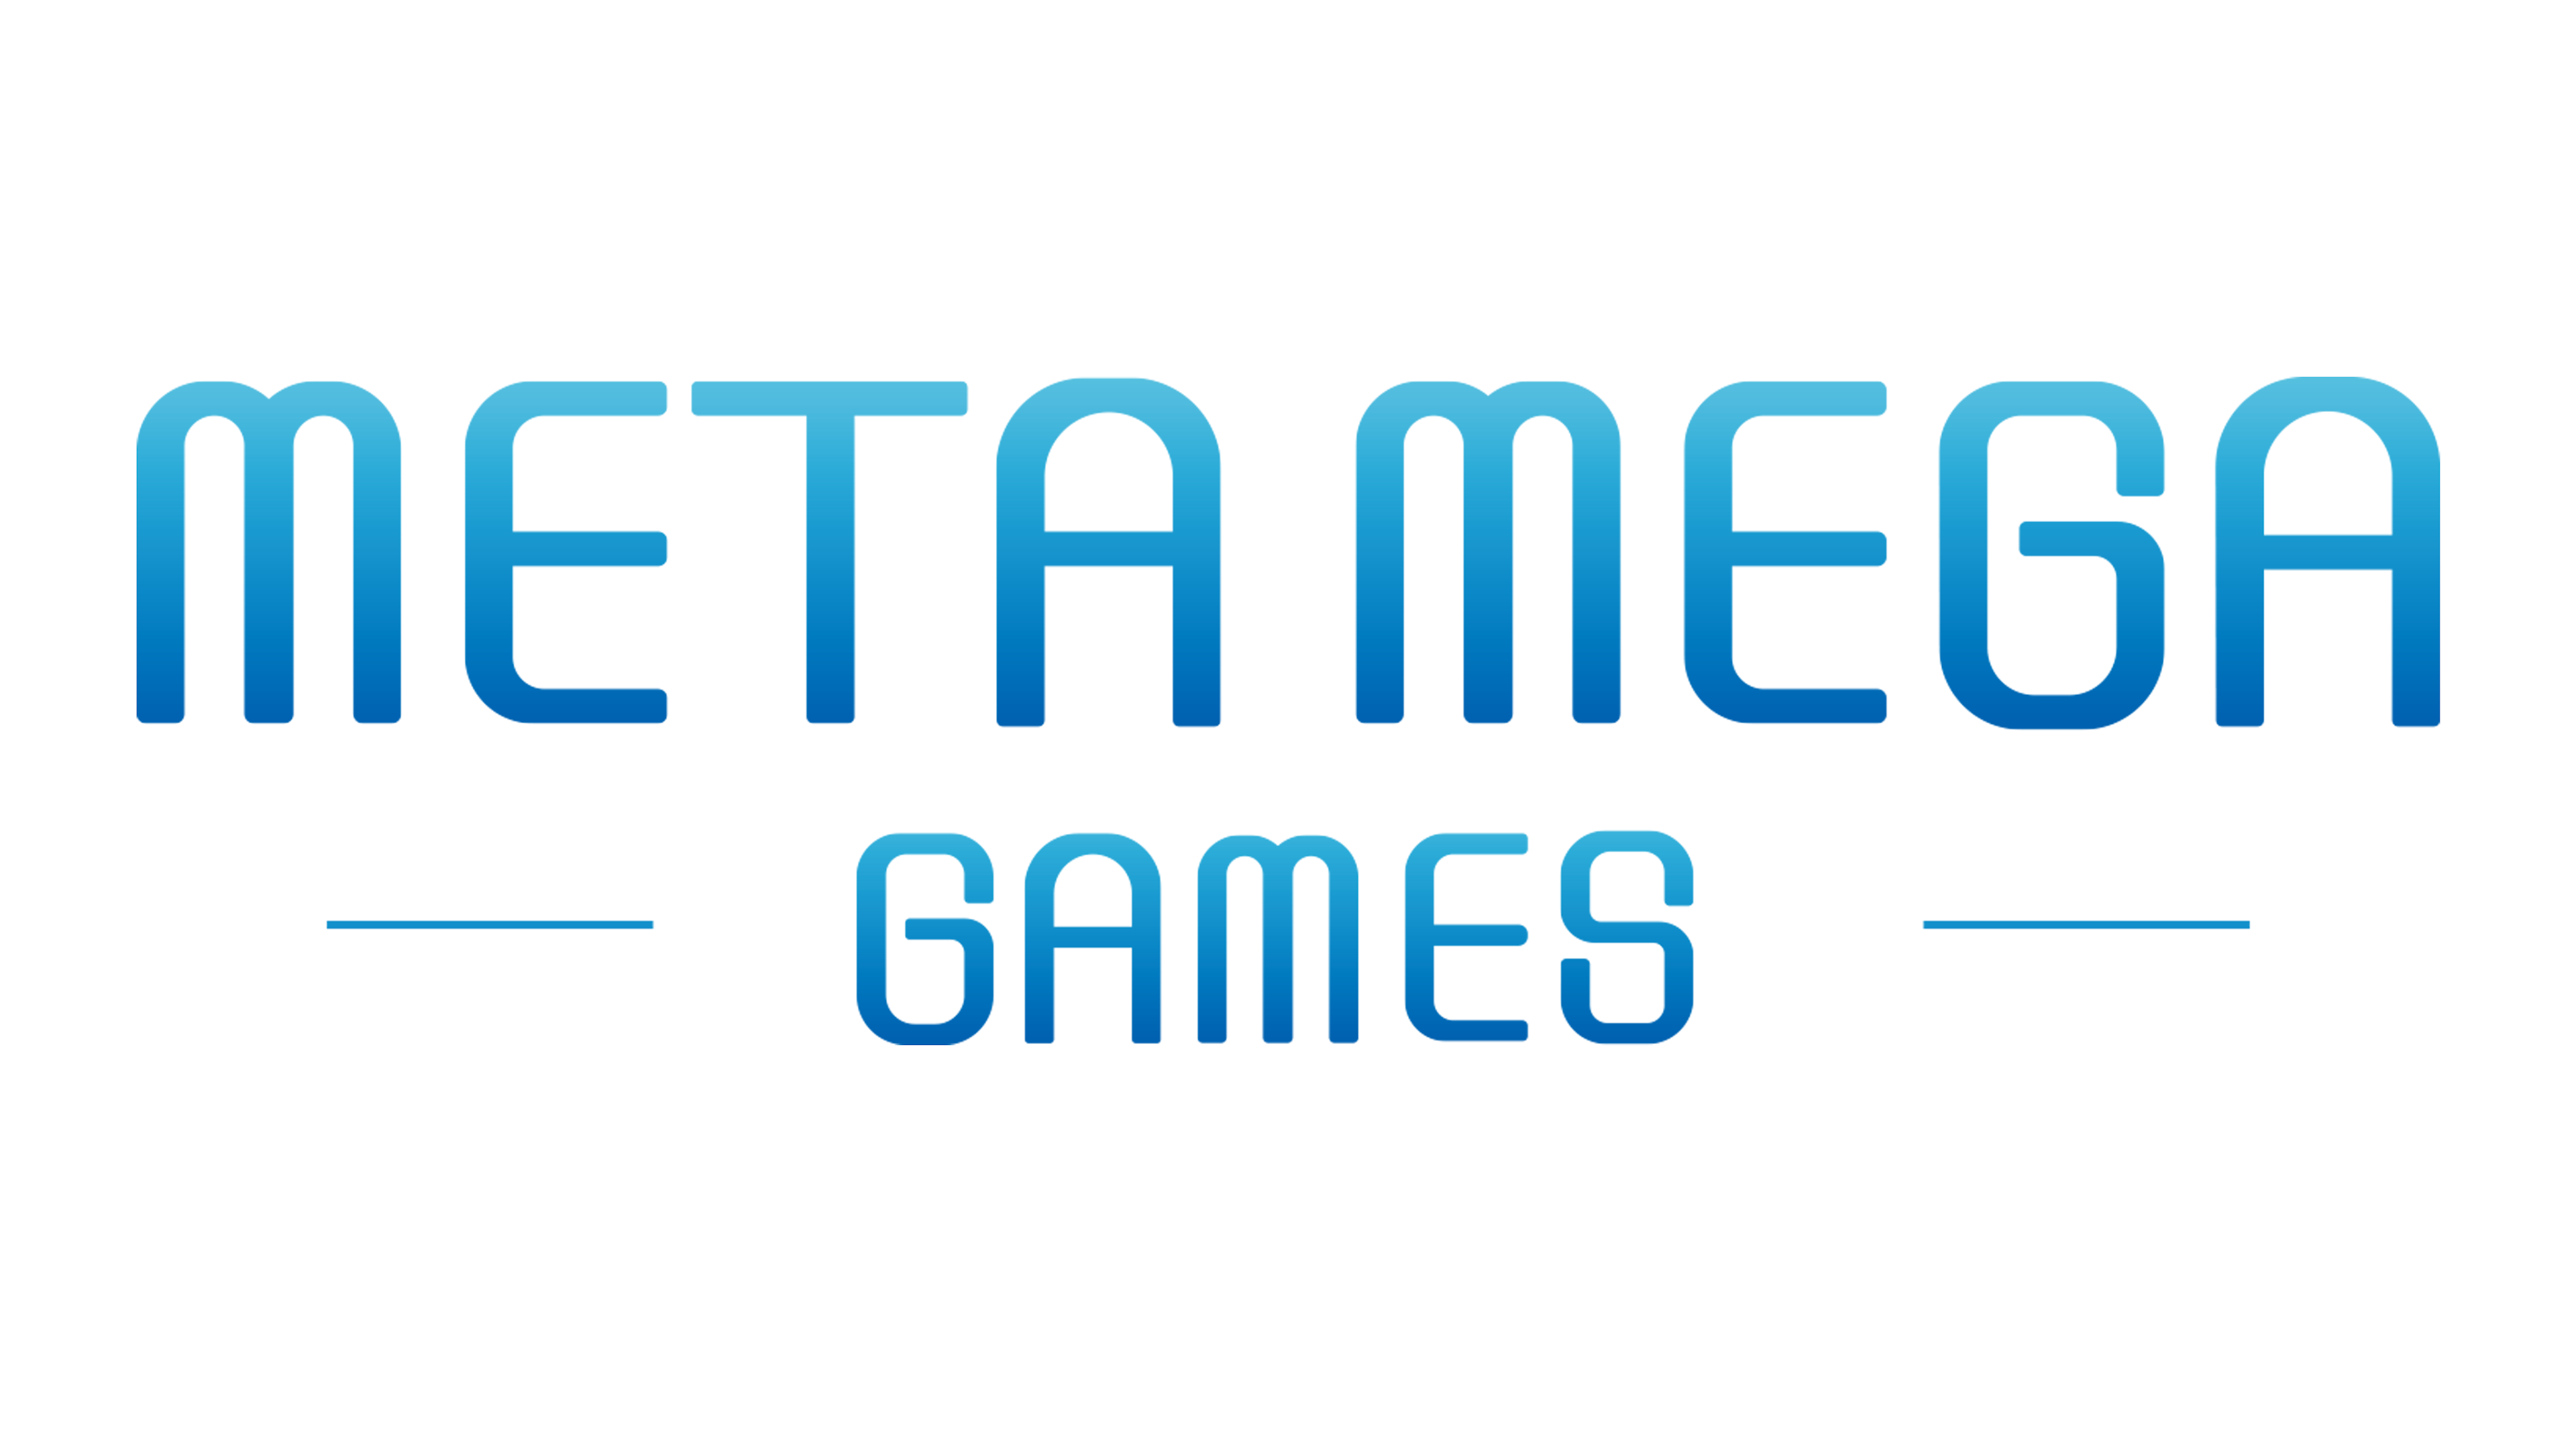 Meta-Games Unlimited logo